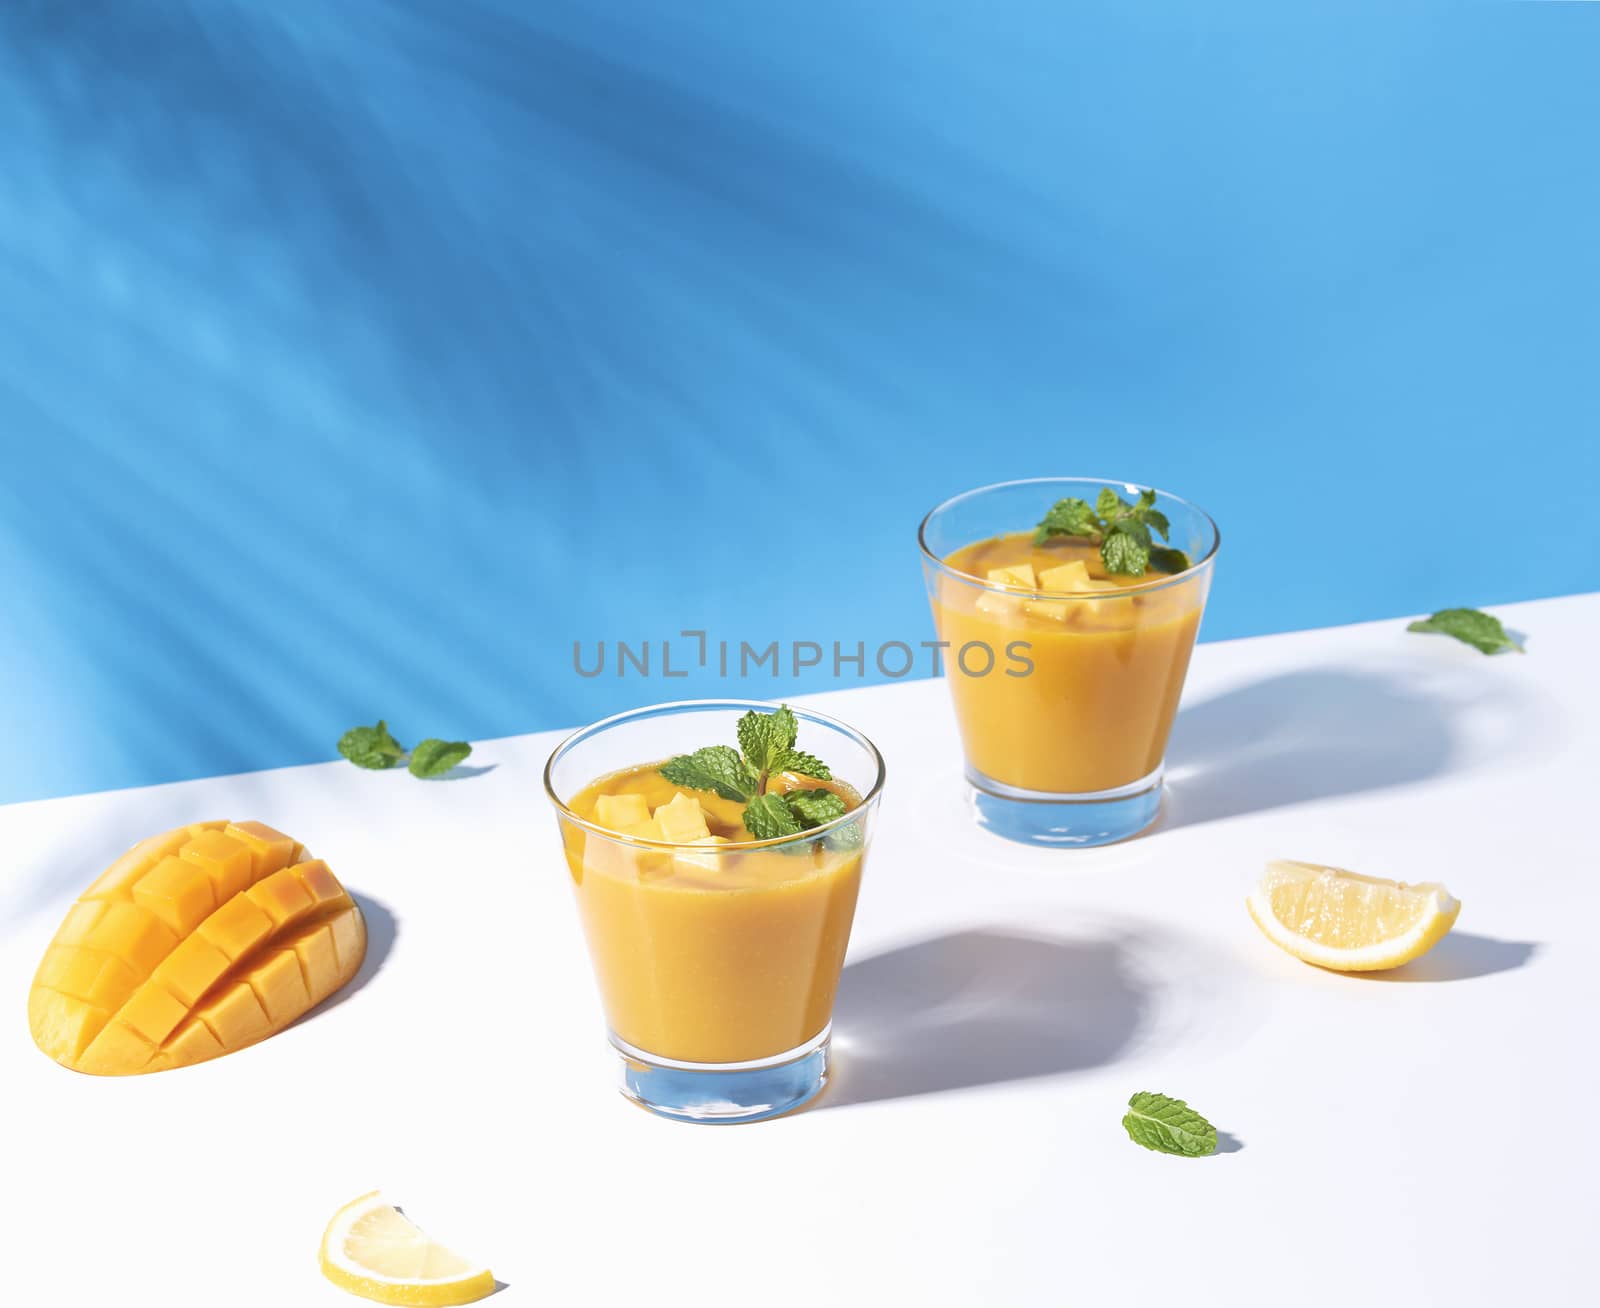 Fresh mango smoothie and ripe mango slice on color background. summer drink.